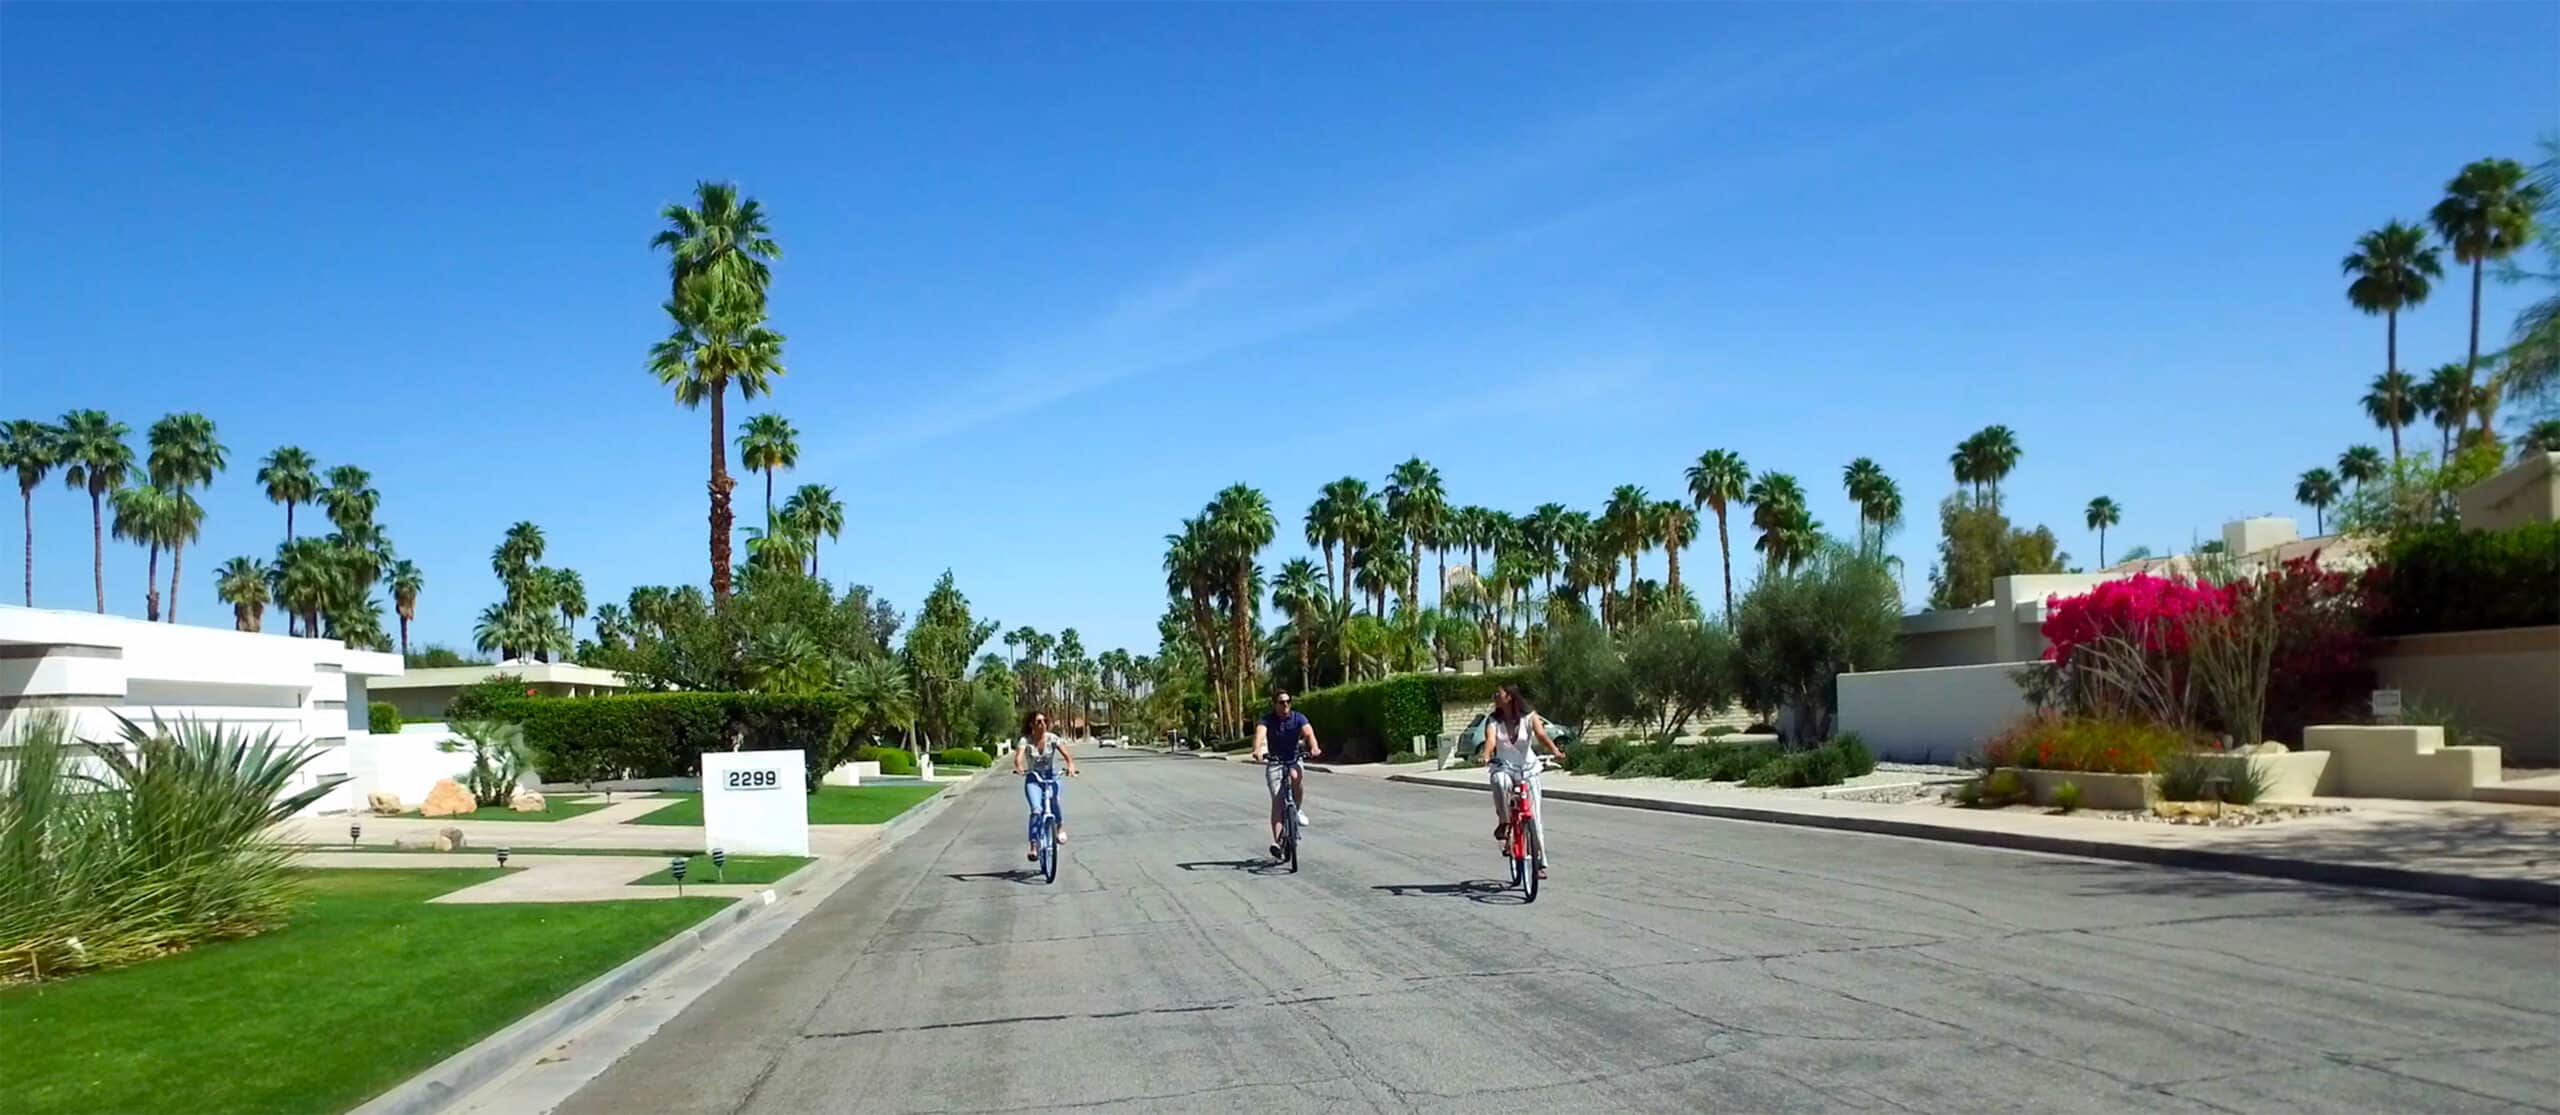 biking in South Palm Springs